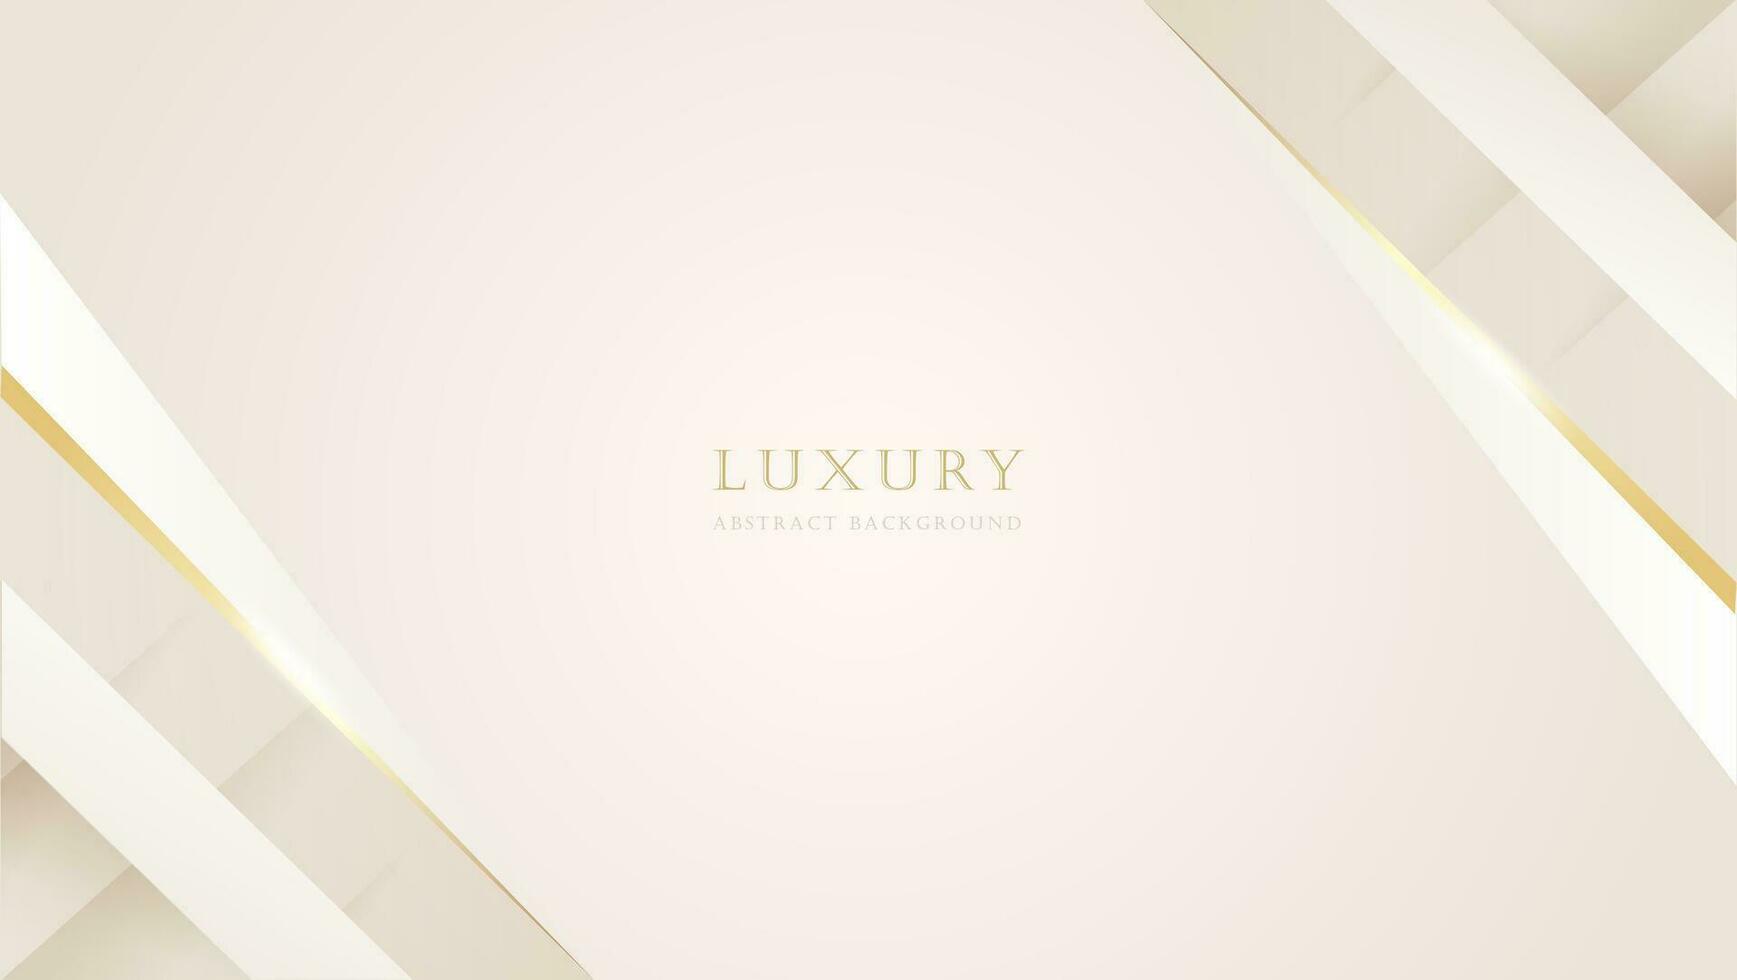 Abstract luxury gold award background. Modern bright diamond frame design banner. Vector illustration